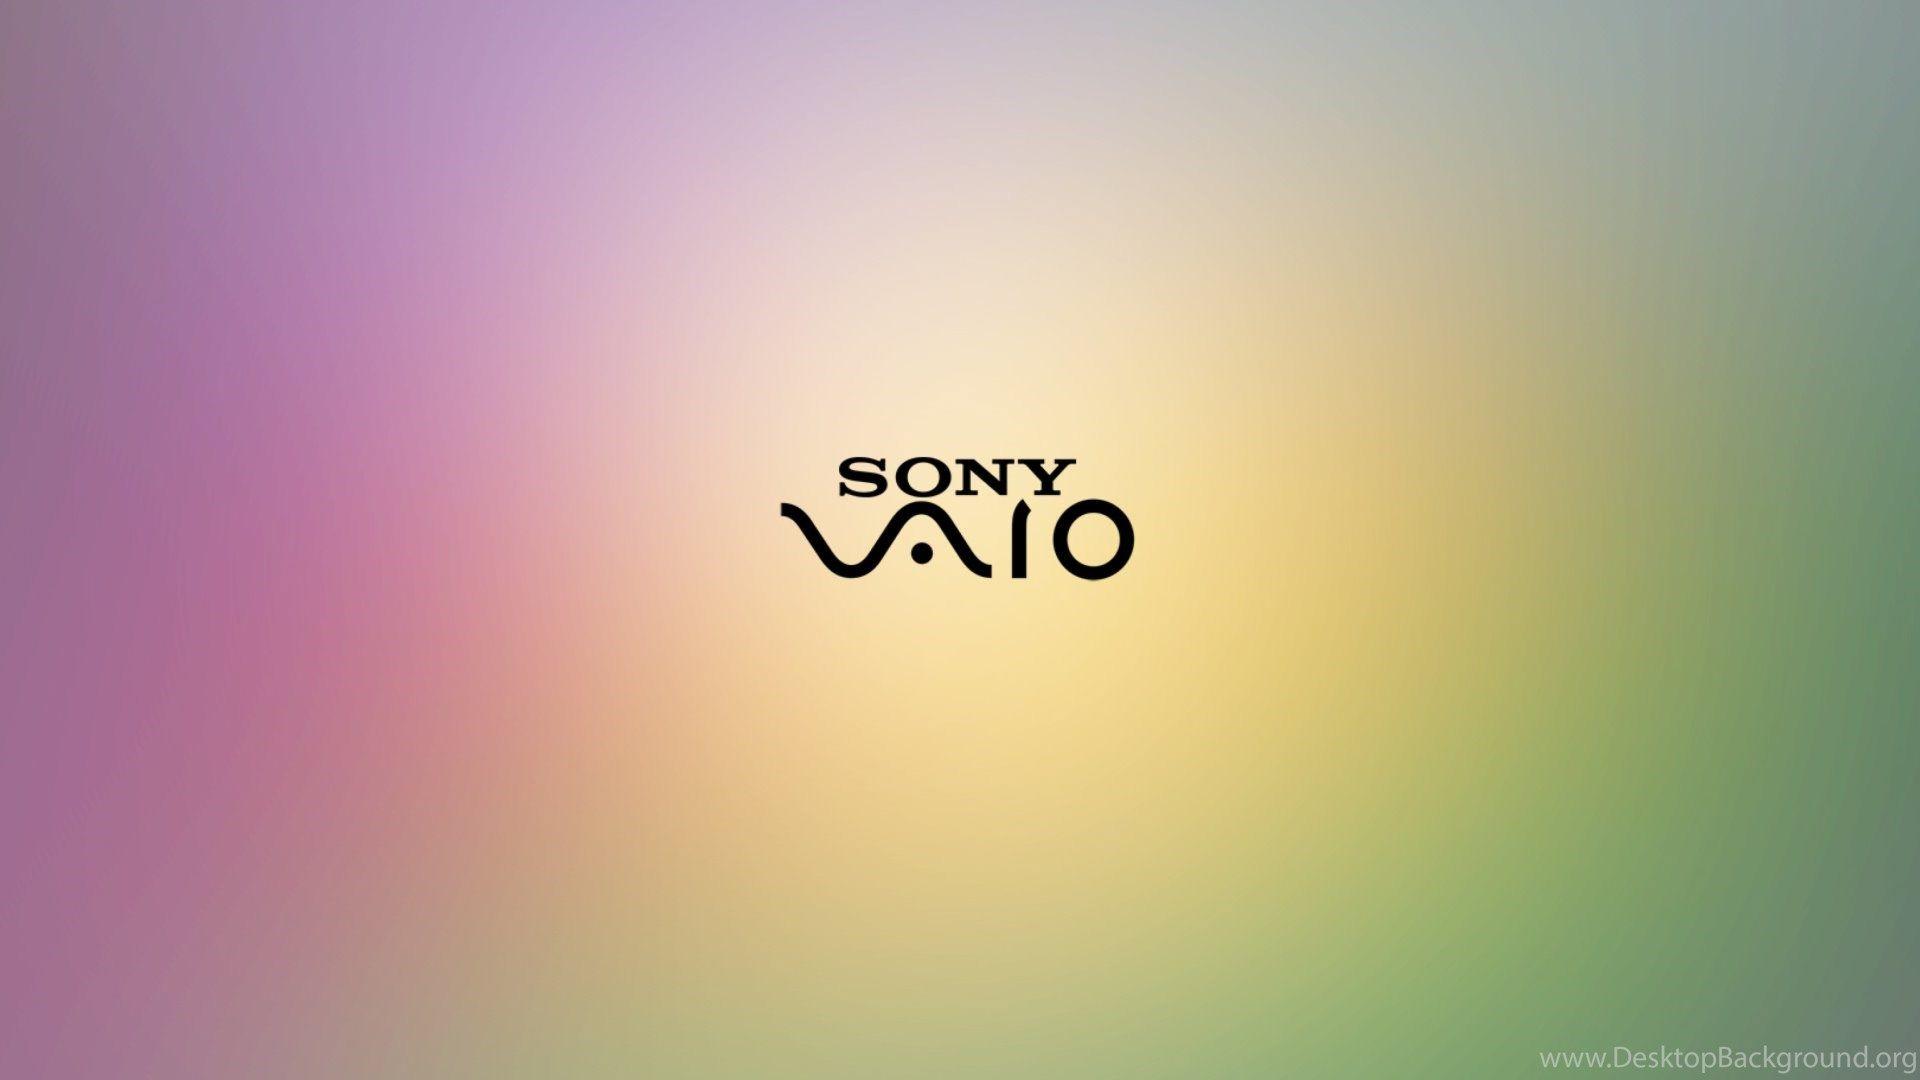 Sony Vaio Wallpaper For Deskx1080 Full HD Desktop Background